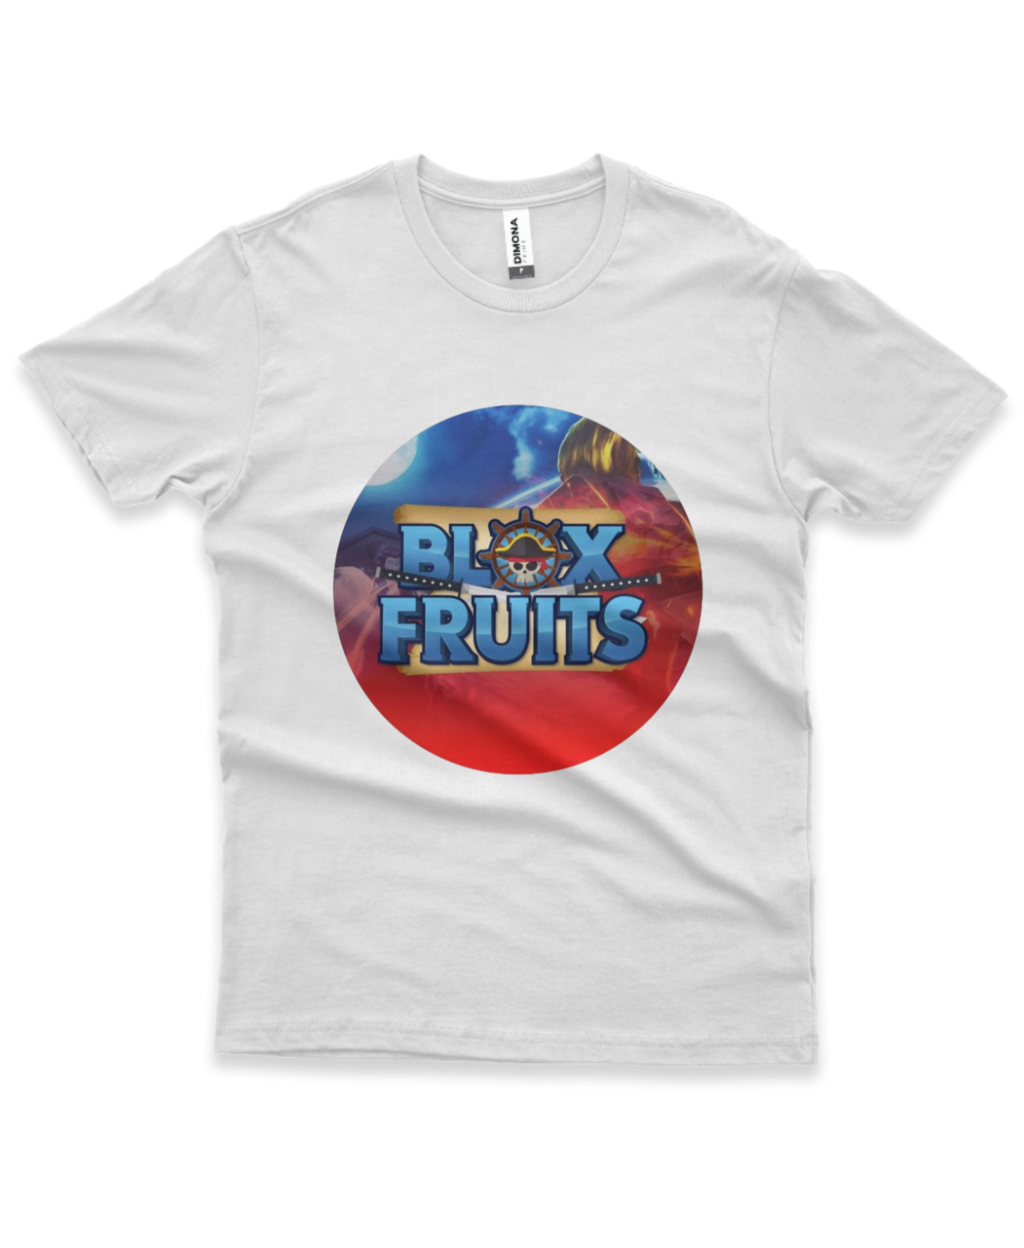 Camiseta Blox Fruits Roblox Preta